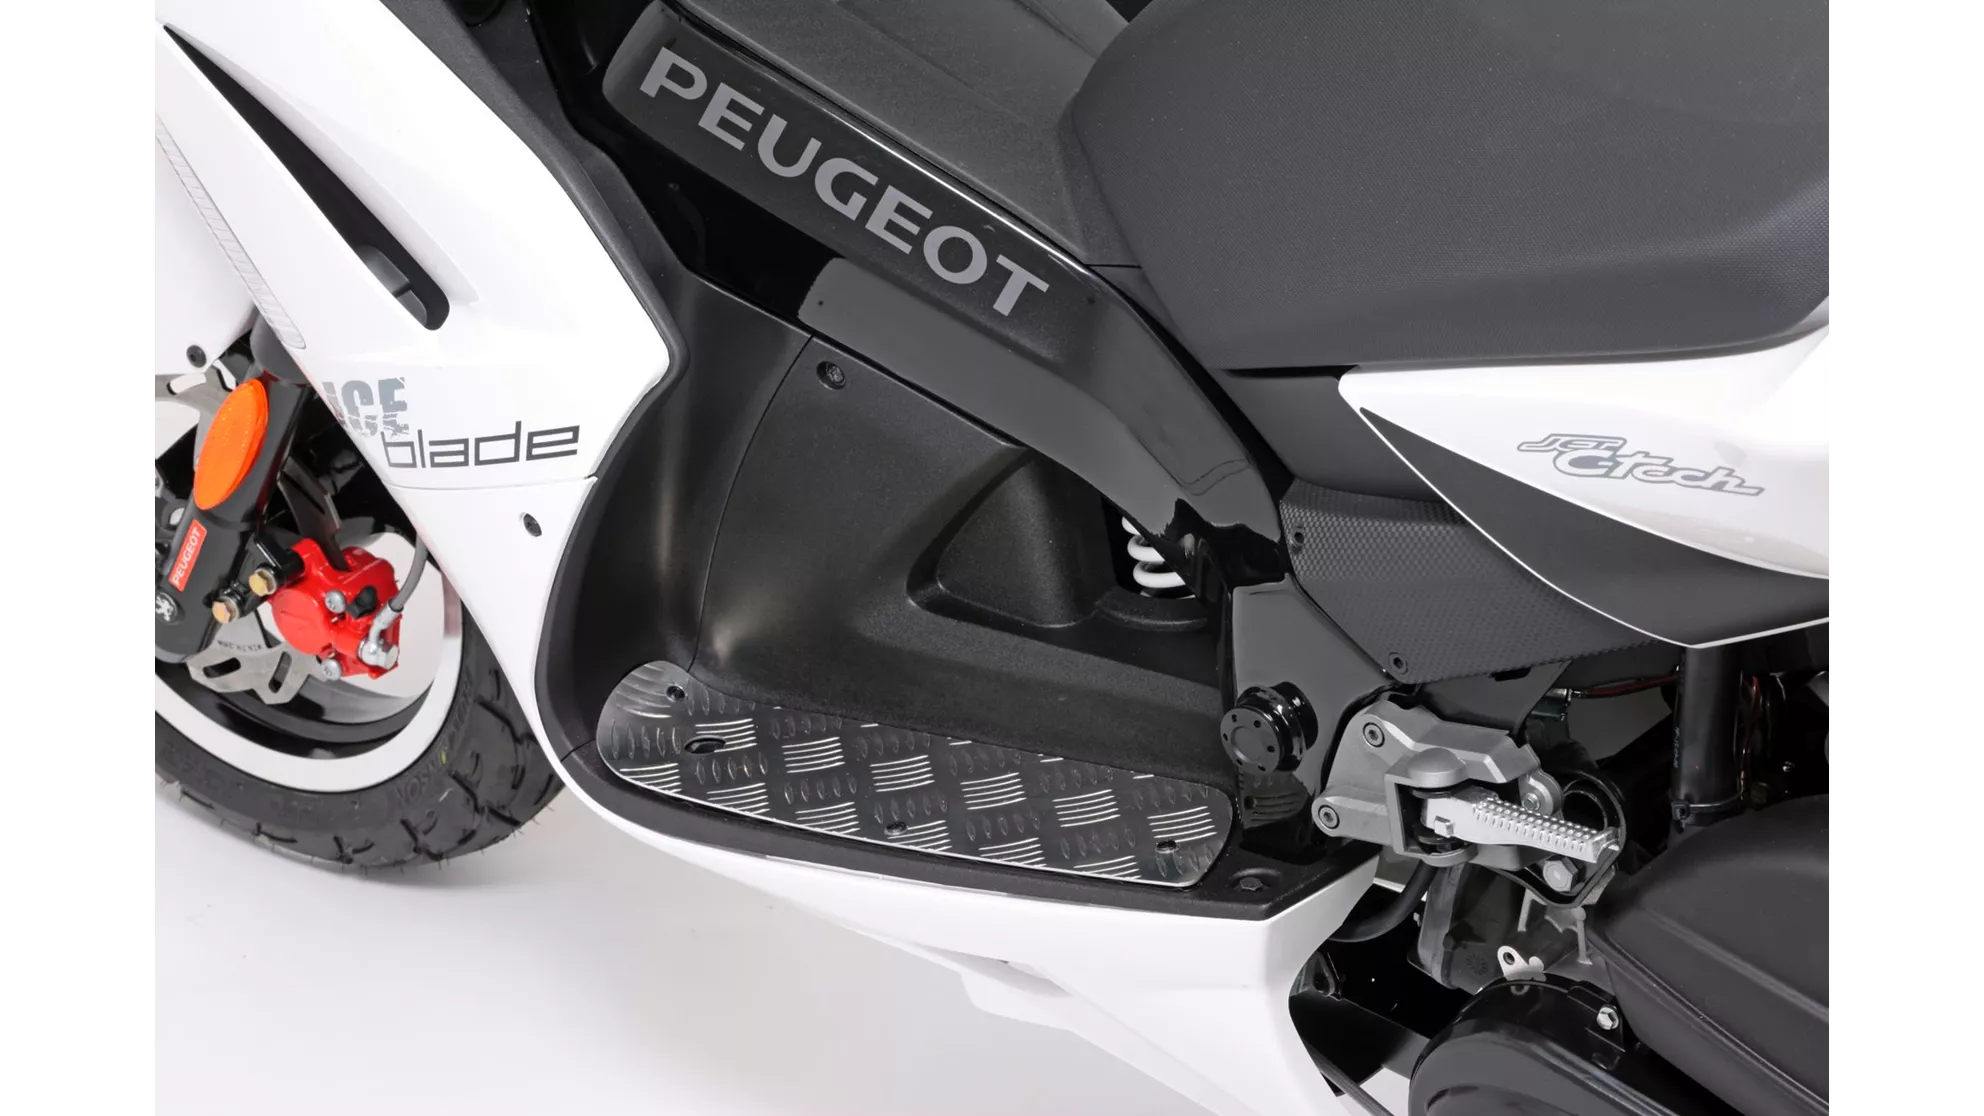 Peugeot Jet Force 50 Iceblade - Image 1